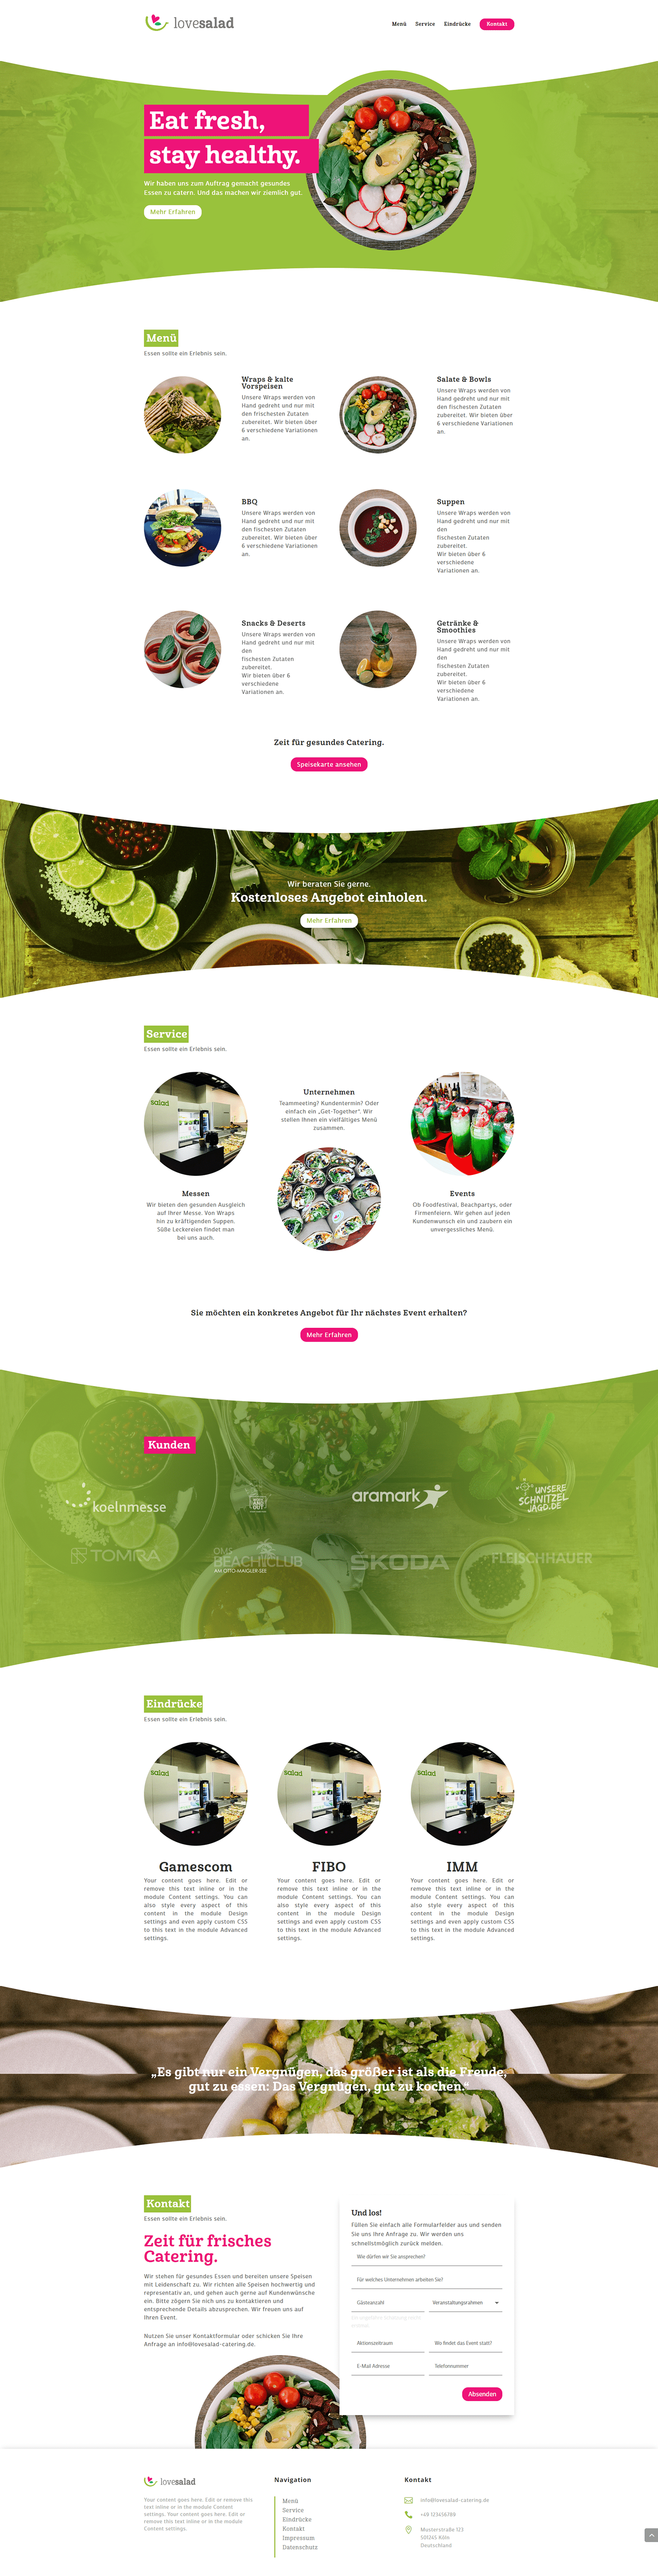 Webdesign for Lovesalad Catering